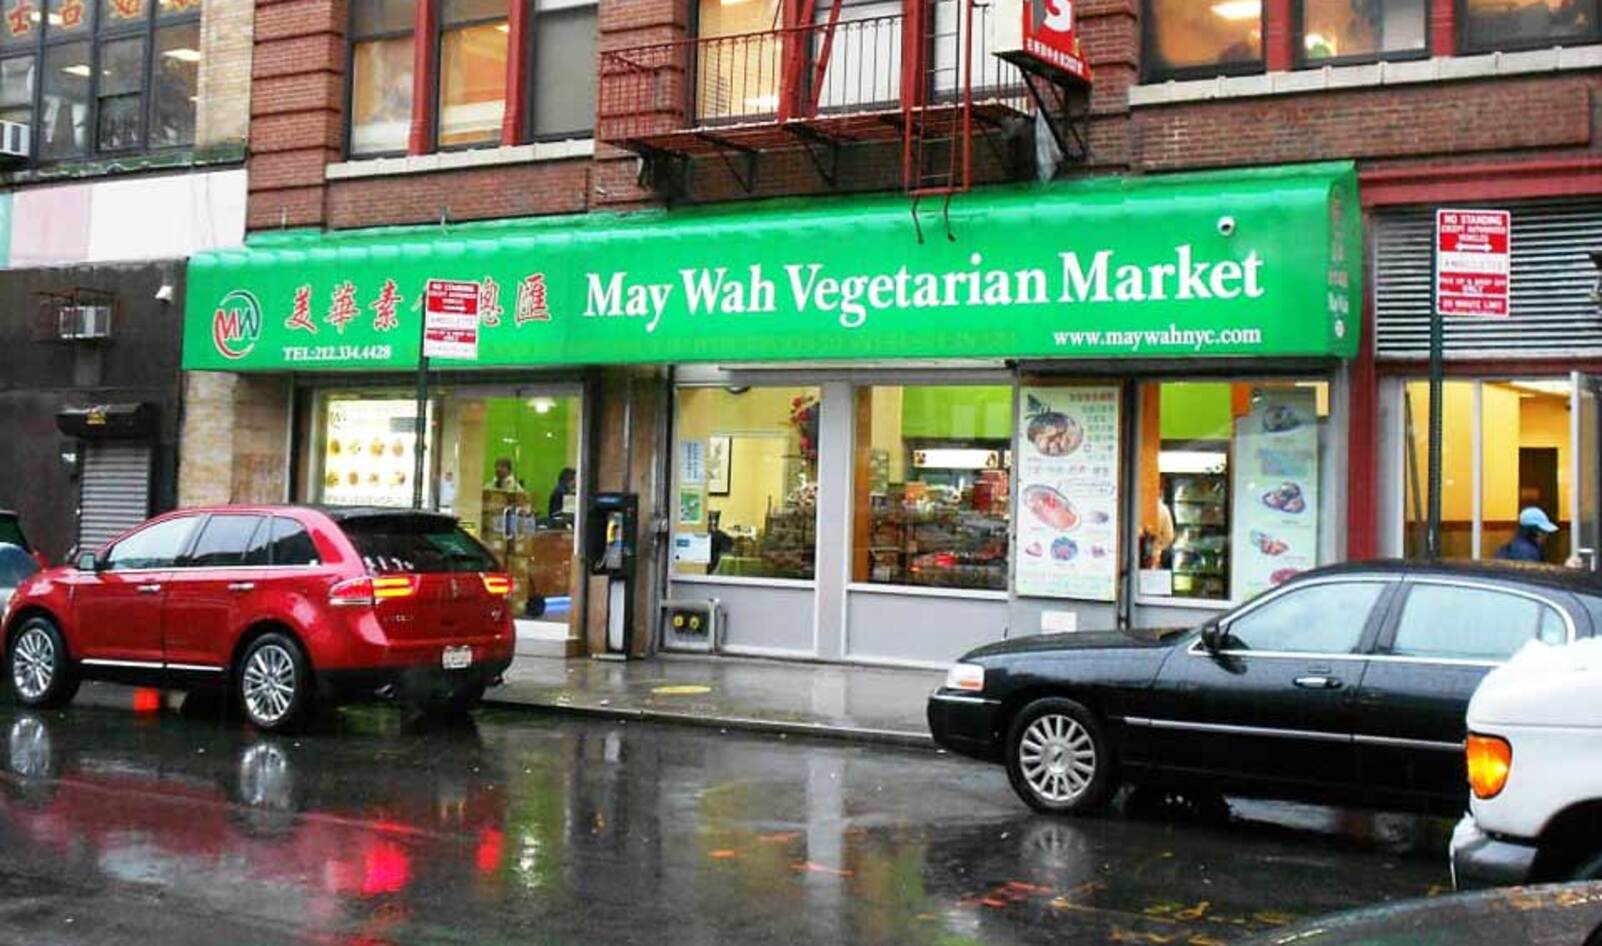 NYC’s May Wah Vegetarian Market Closes, Rebrands as Lily’s Vegan Pantry